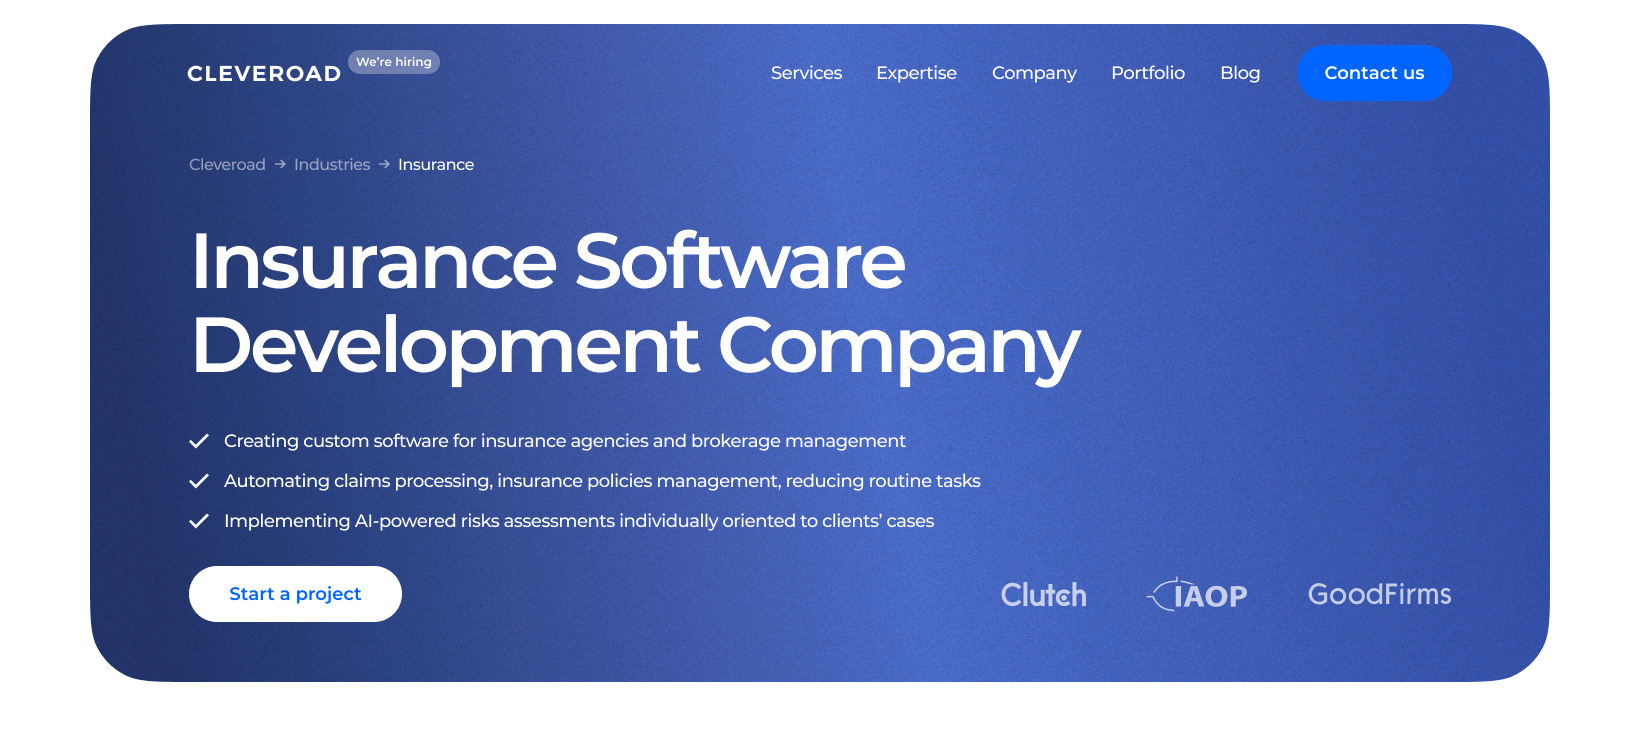 Insurance Software Development Company | Cleveroad